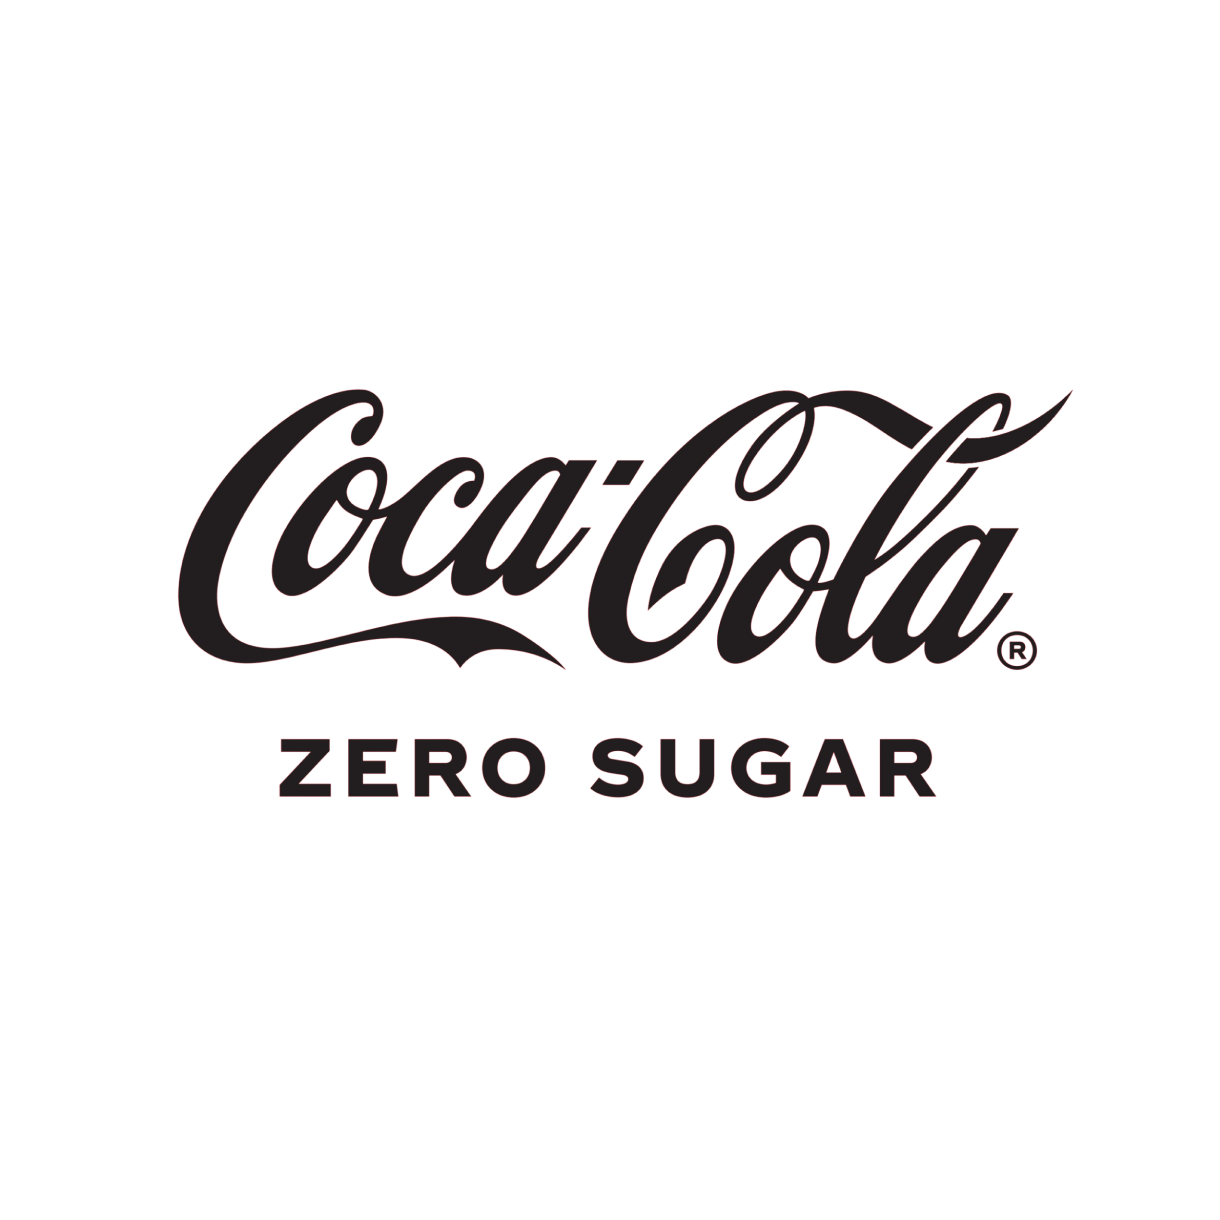 Coke Zero Sugar Logo